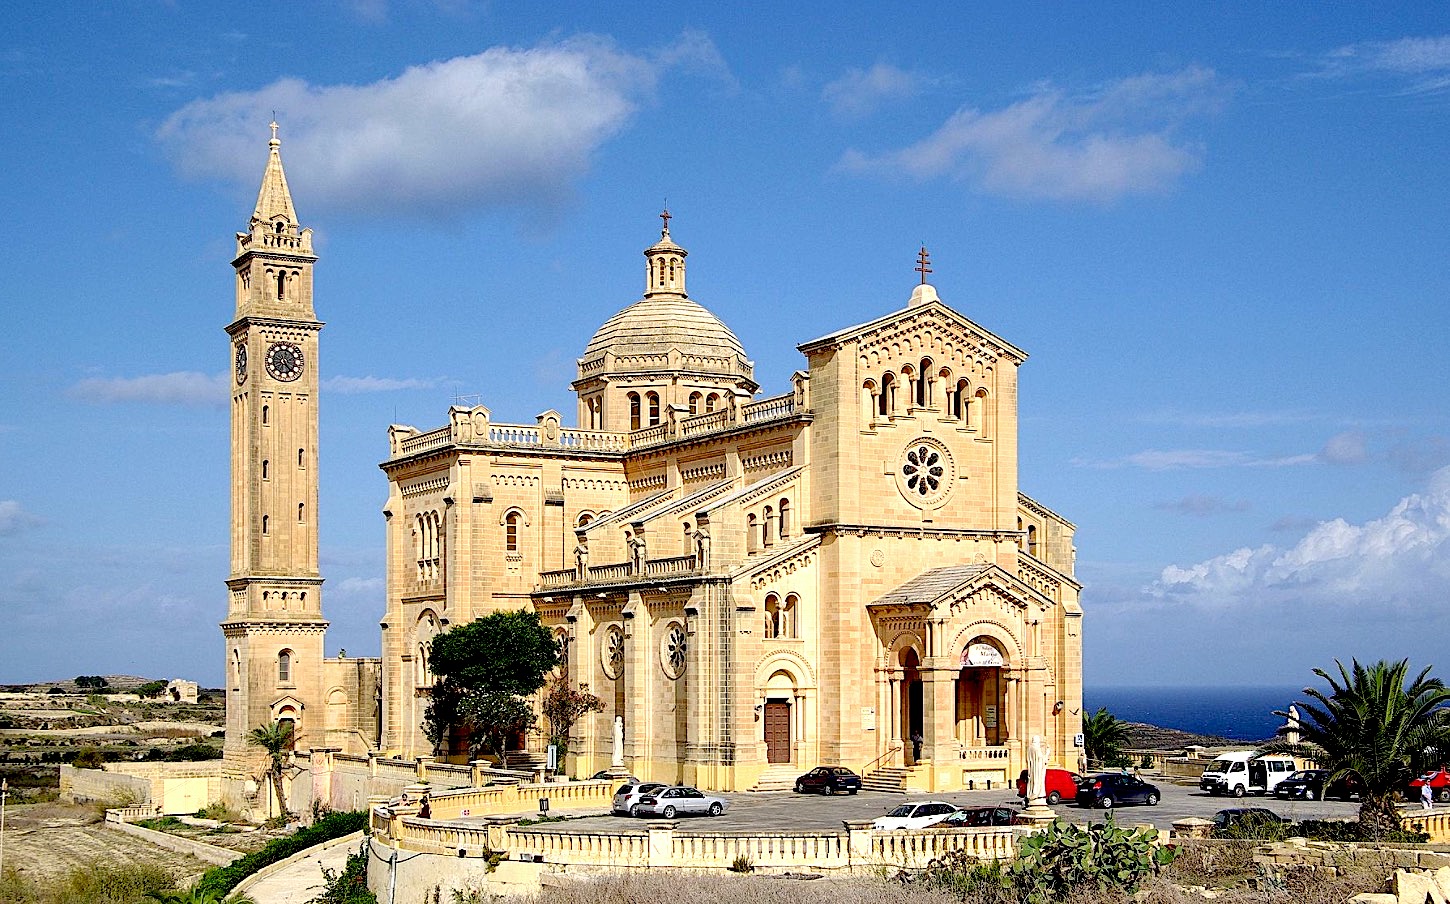 El santuario de Ta Pinu en Malta - (Wikicommons - Berthold Werner)